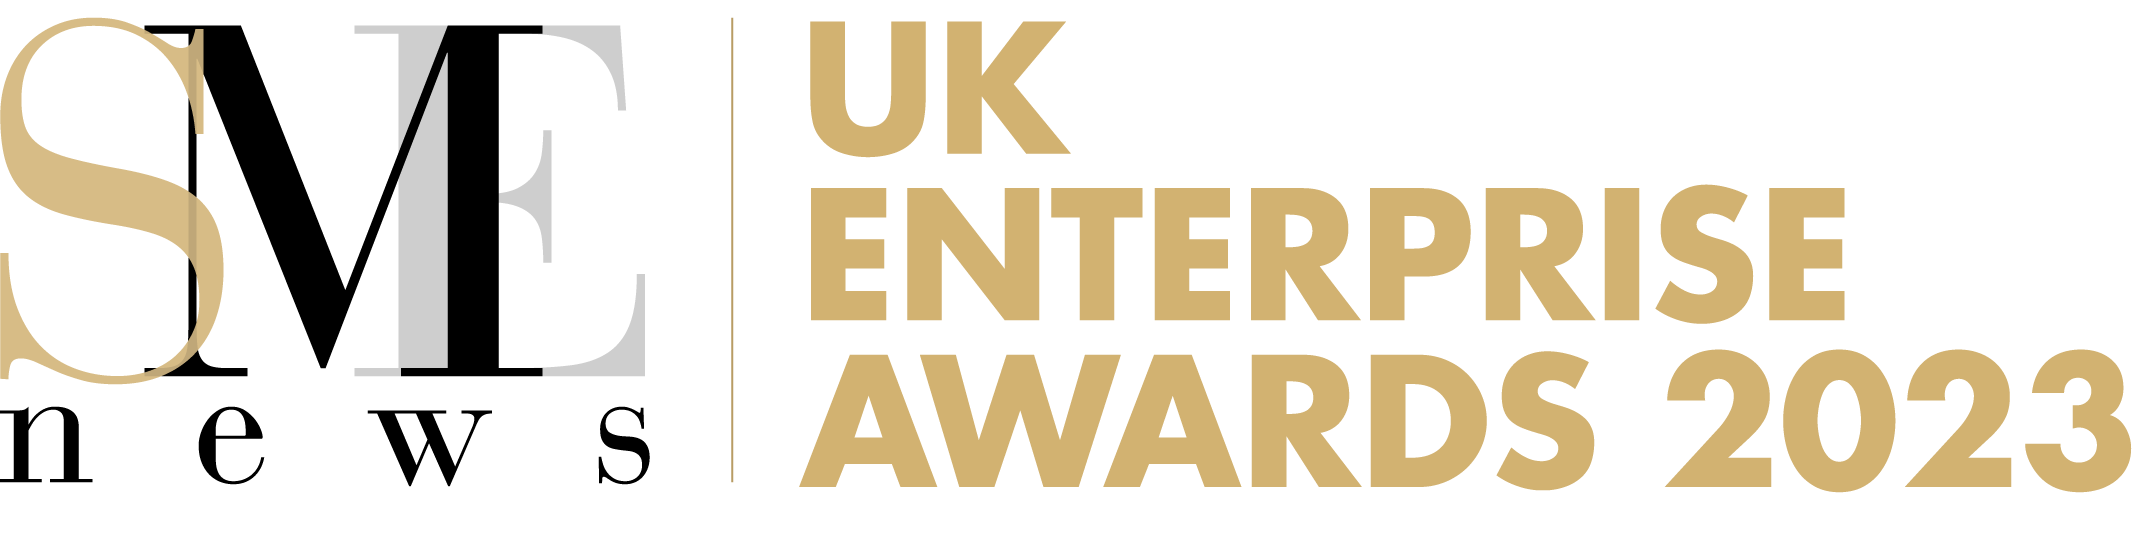 UK Enterprise Awards 2023